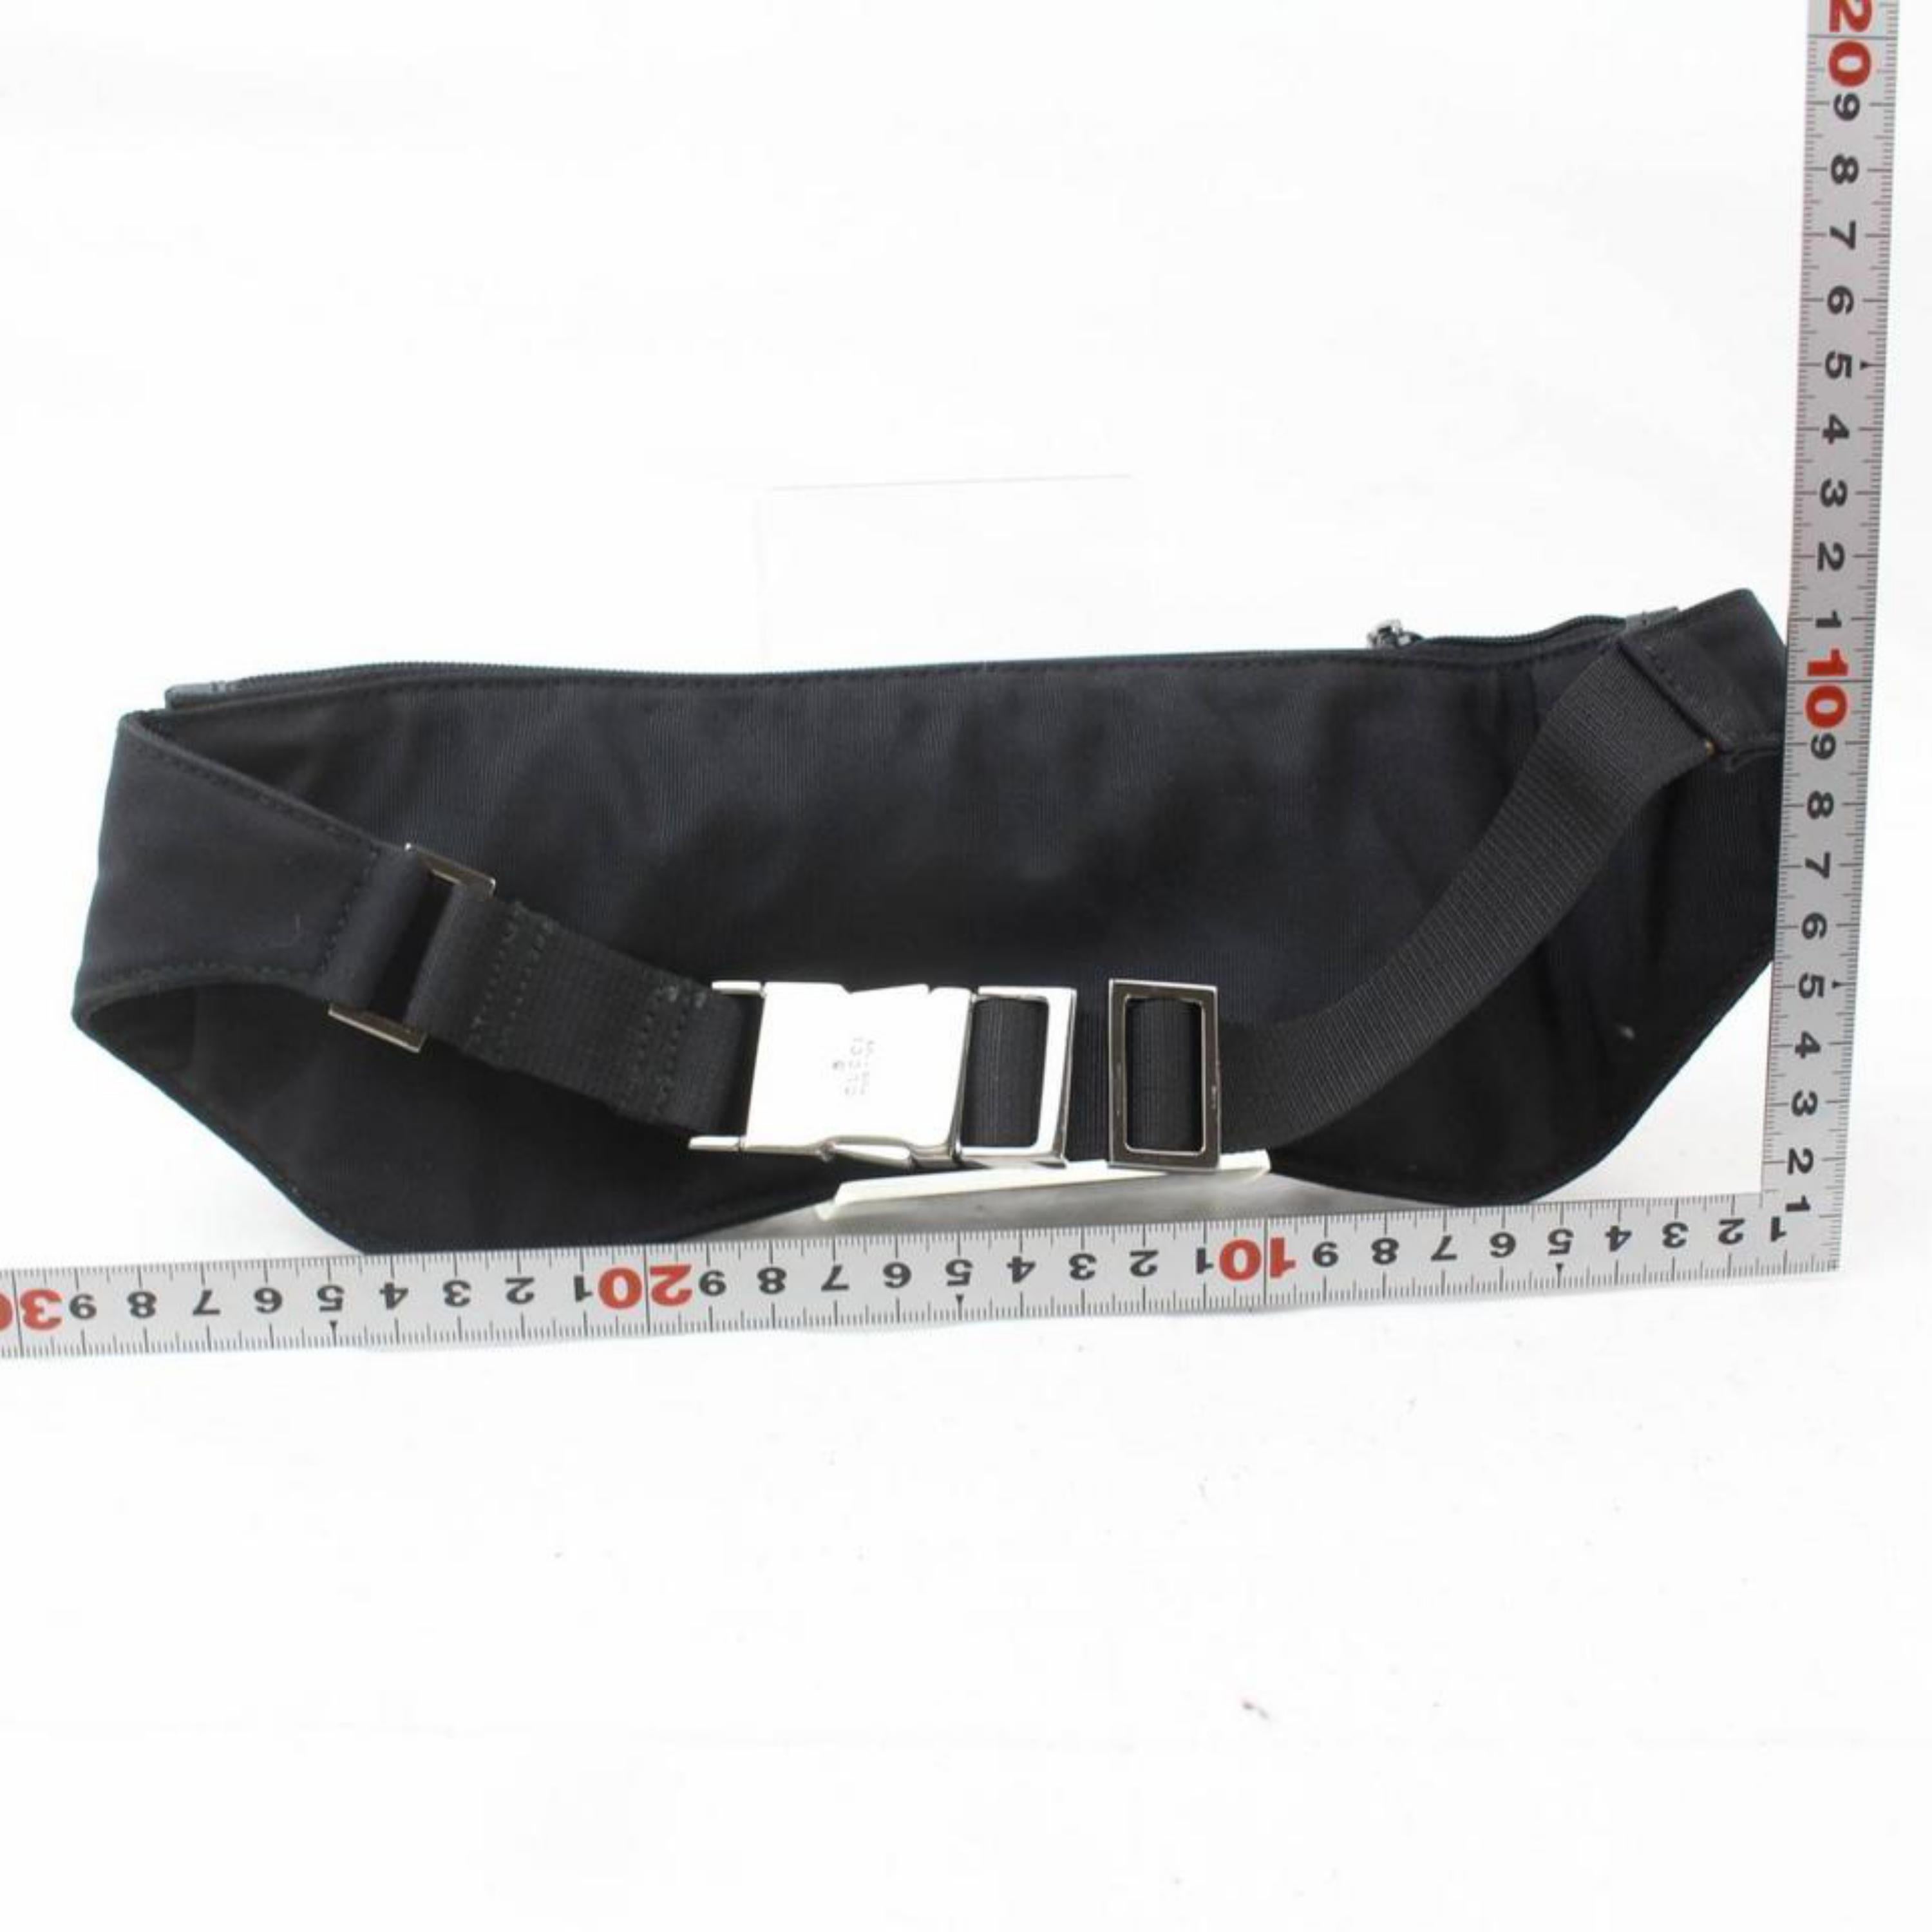 Gucci Black Nylon Logo Fanny Pack Waist Pouch Bag 868712 Belt For Sale 2